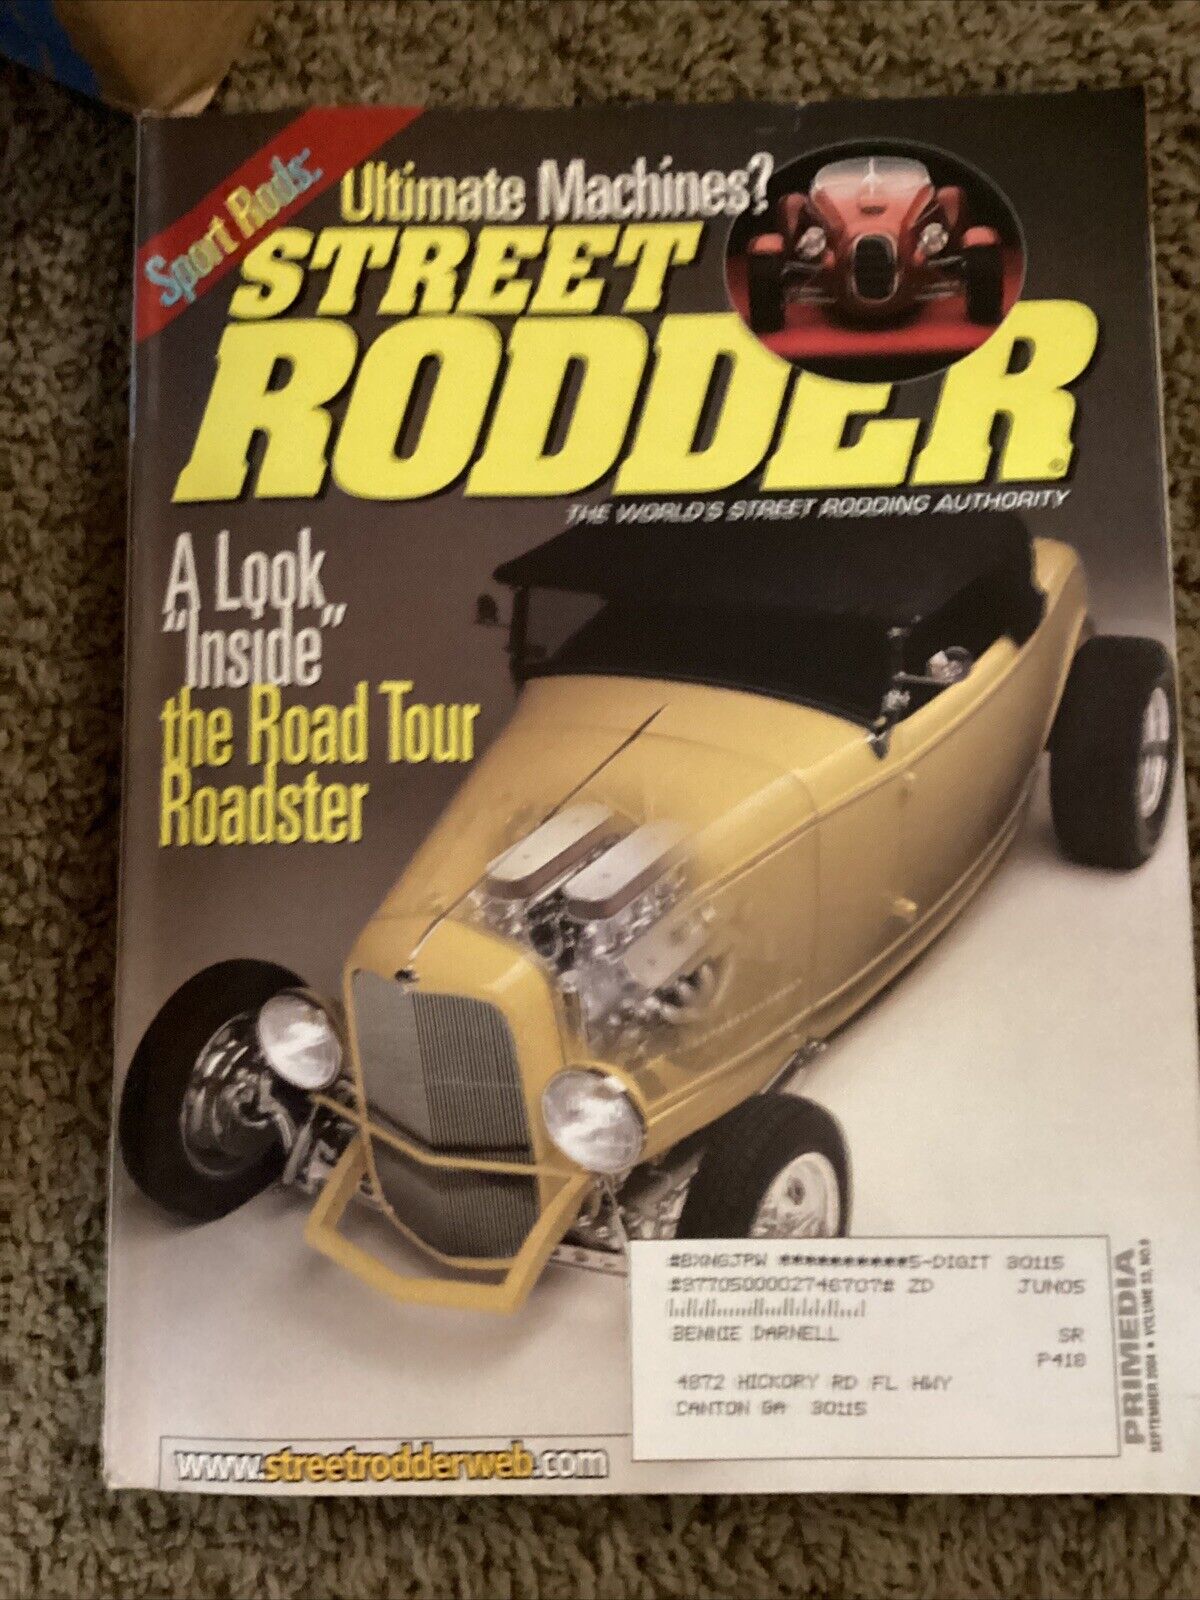 Street Rodder Magazine September 2004 Vol 33 No. 9 The Road Tour Roadster